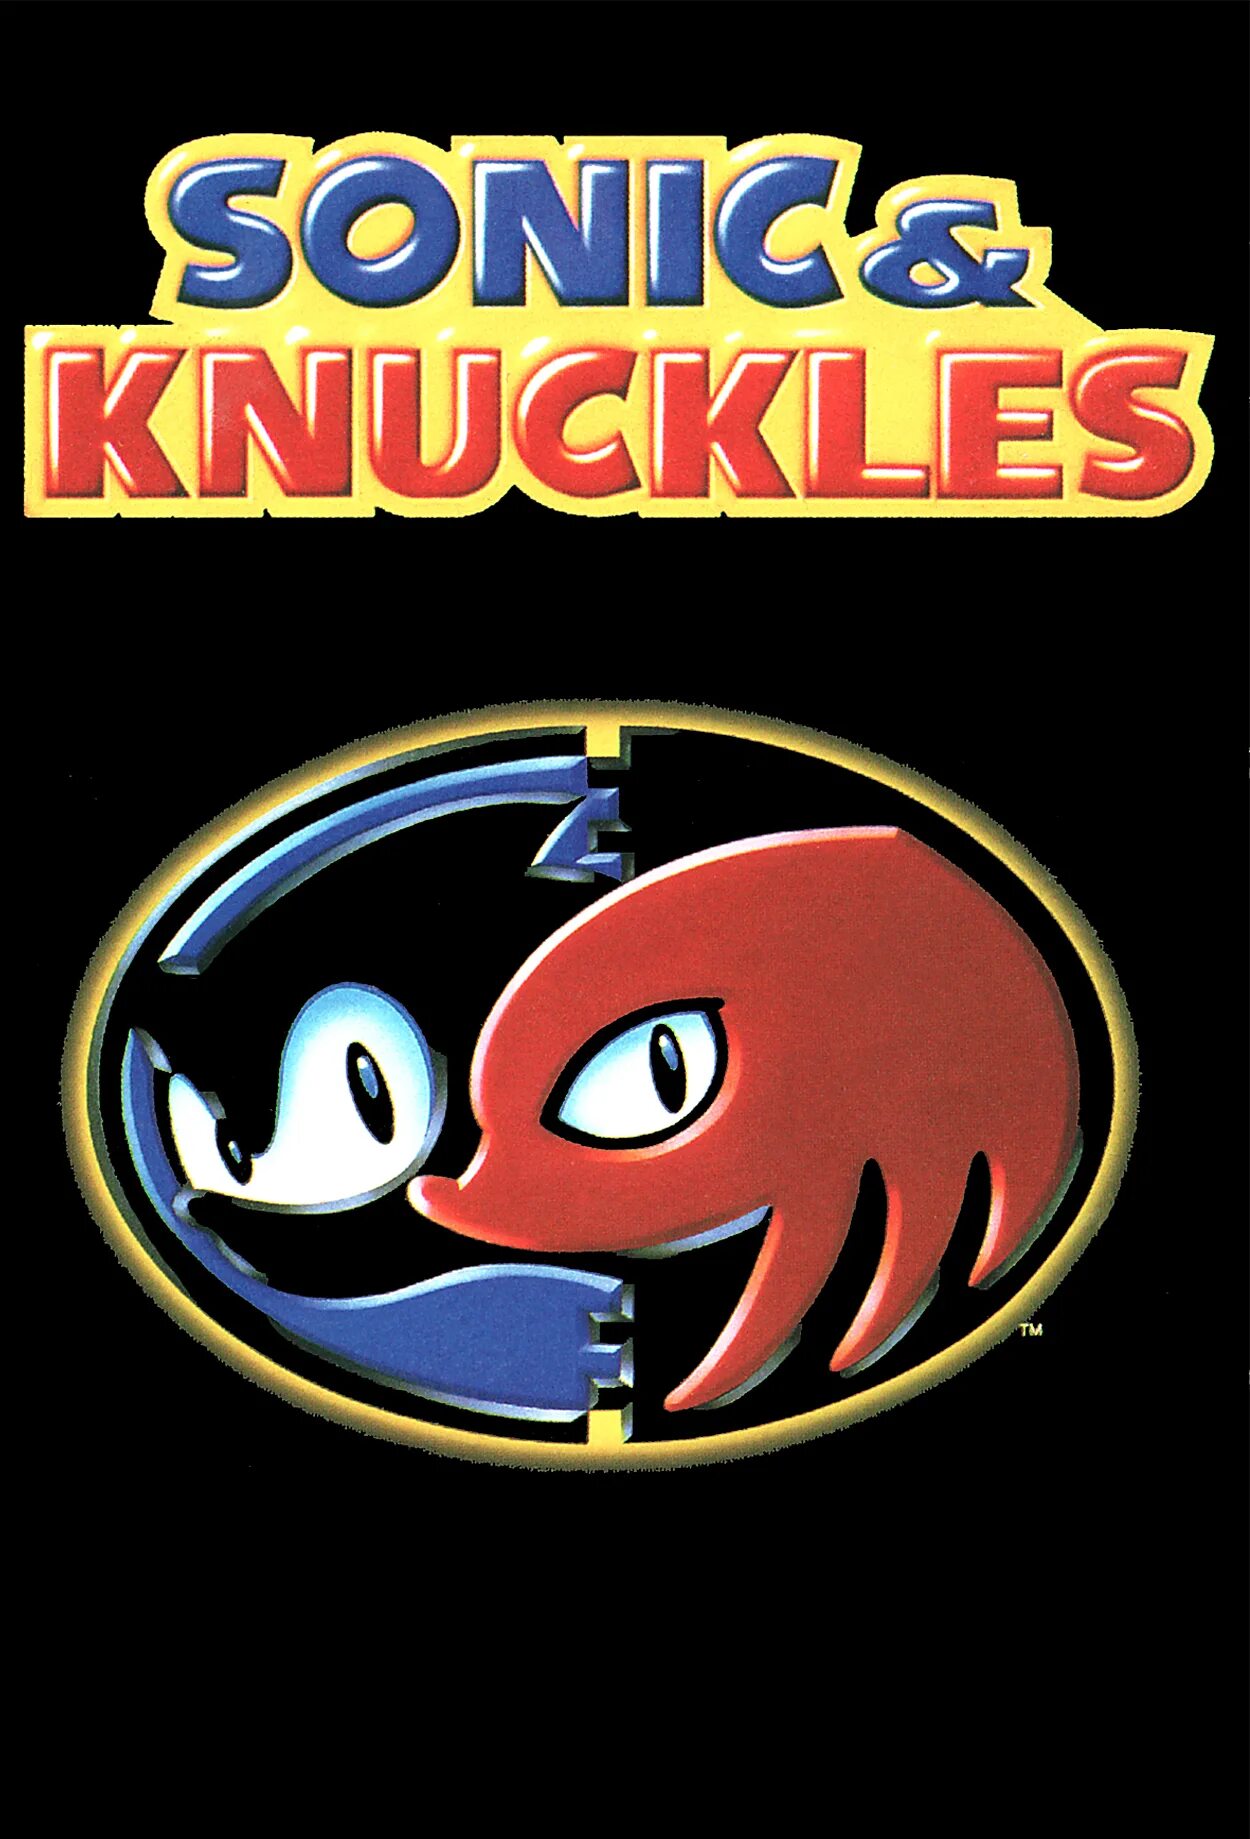 Sonic and knuckles download. Sonic Knuckles Sega картридж. Картридж Sonic and Knuckles для Sega Mega Drive 2. Игра Sonic & Knuckles для Sega. Genesis 600 игр Sonic and Knuckles 3.